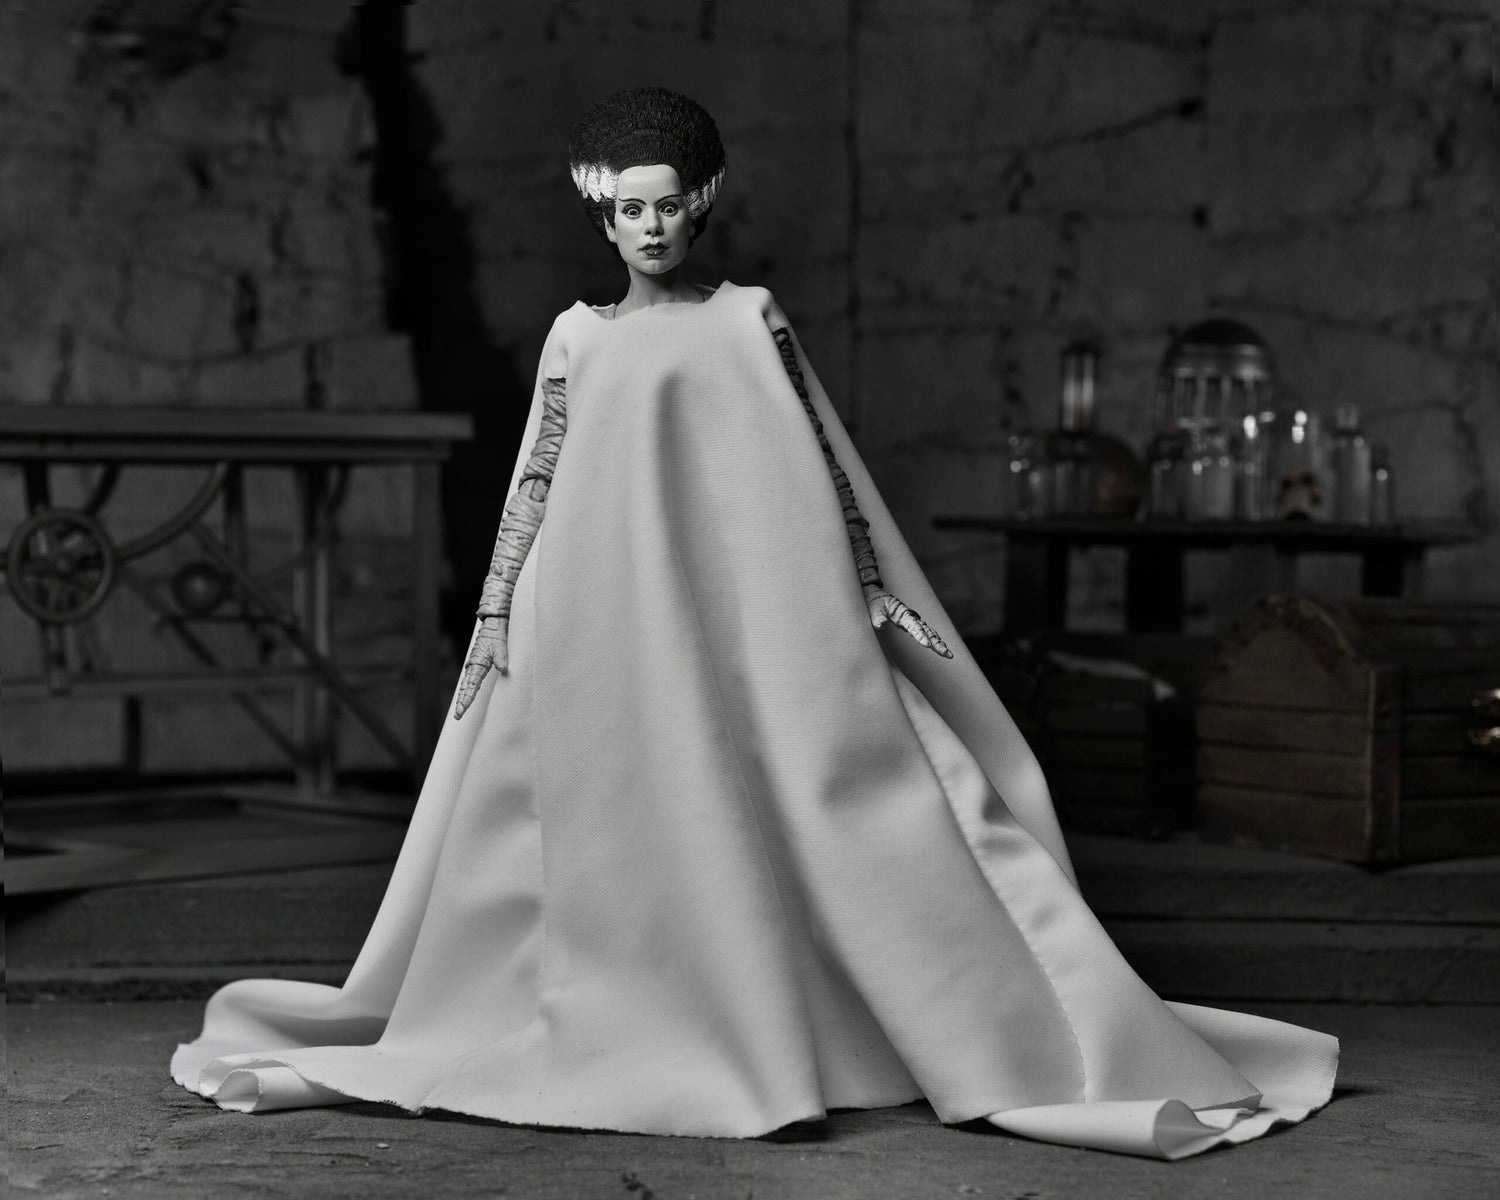 NECA Universal Monsters Bride of Frankenstein (Black and White) NECA